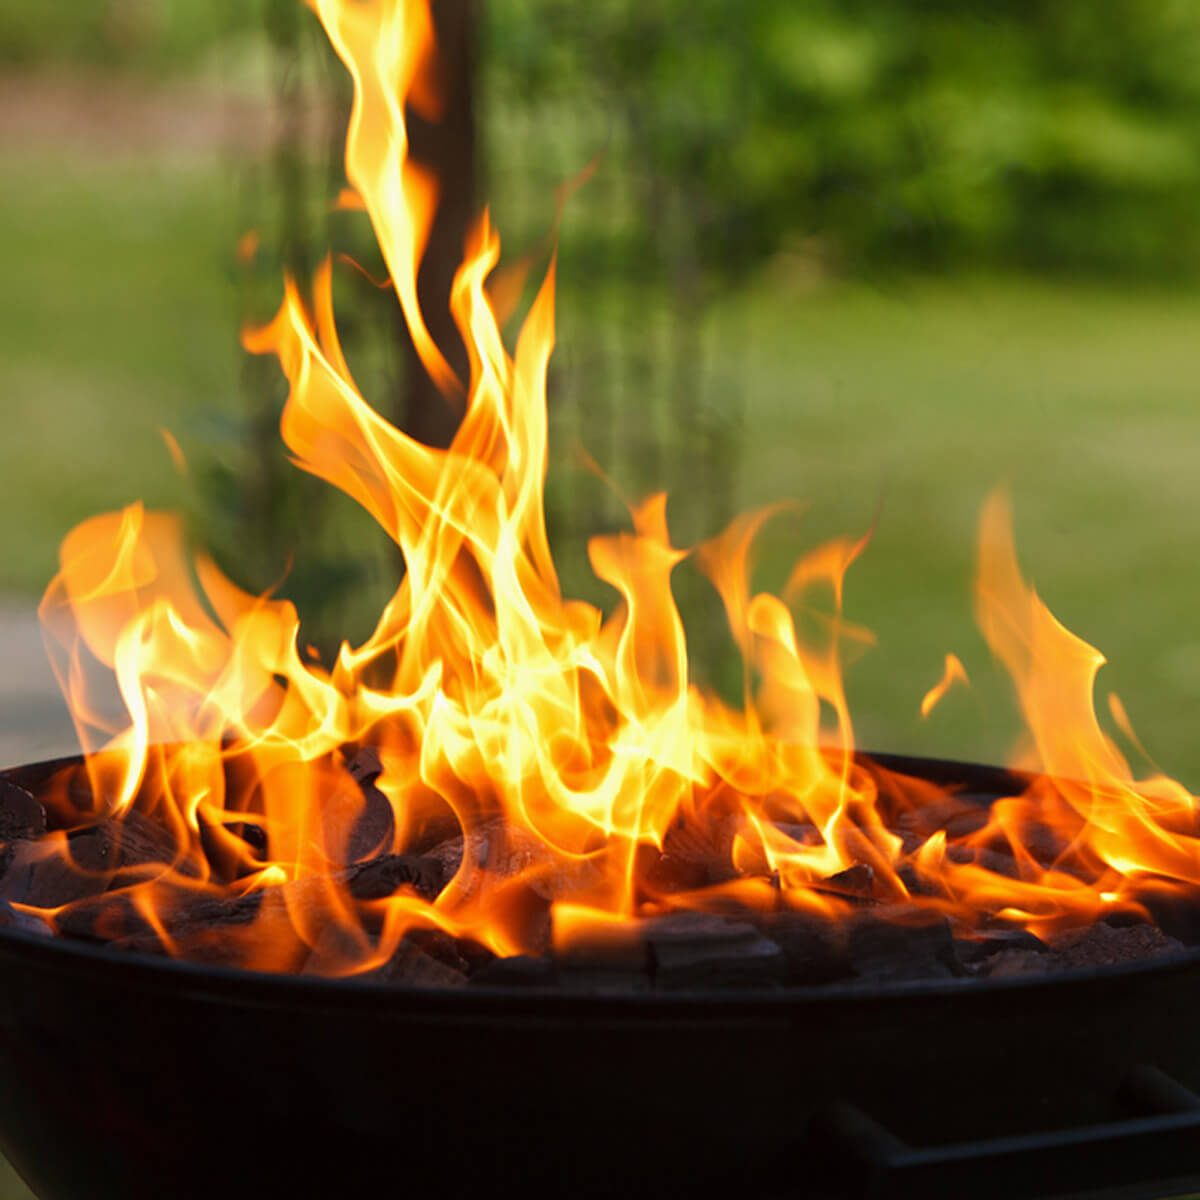 shutterstock_60003571 fire grill